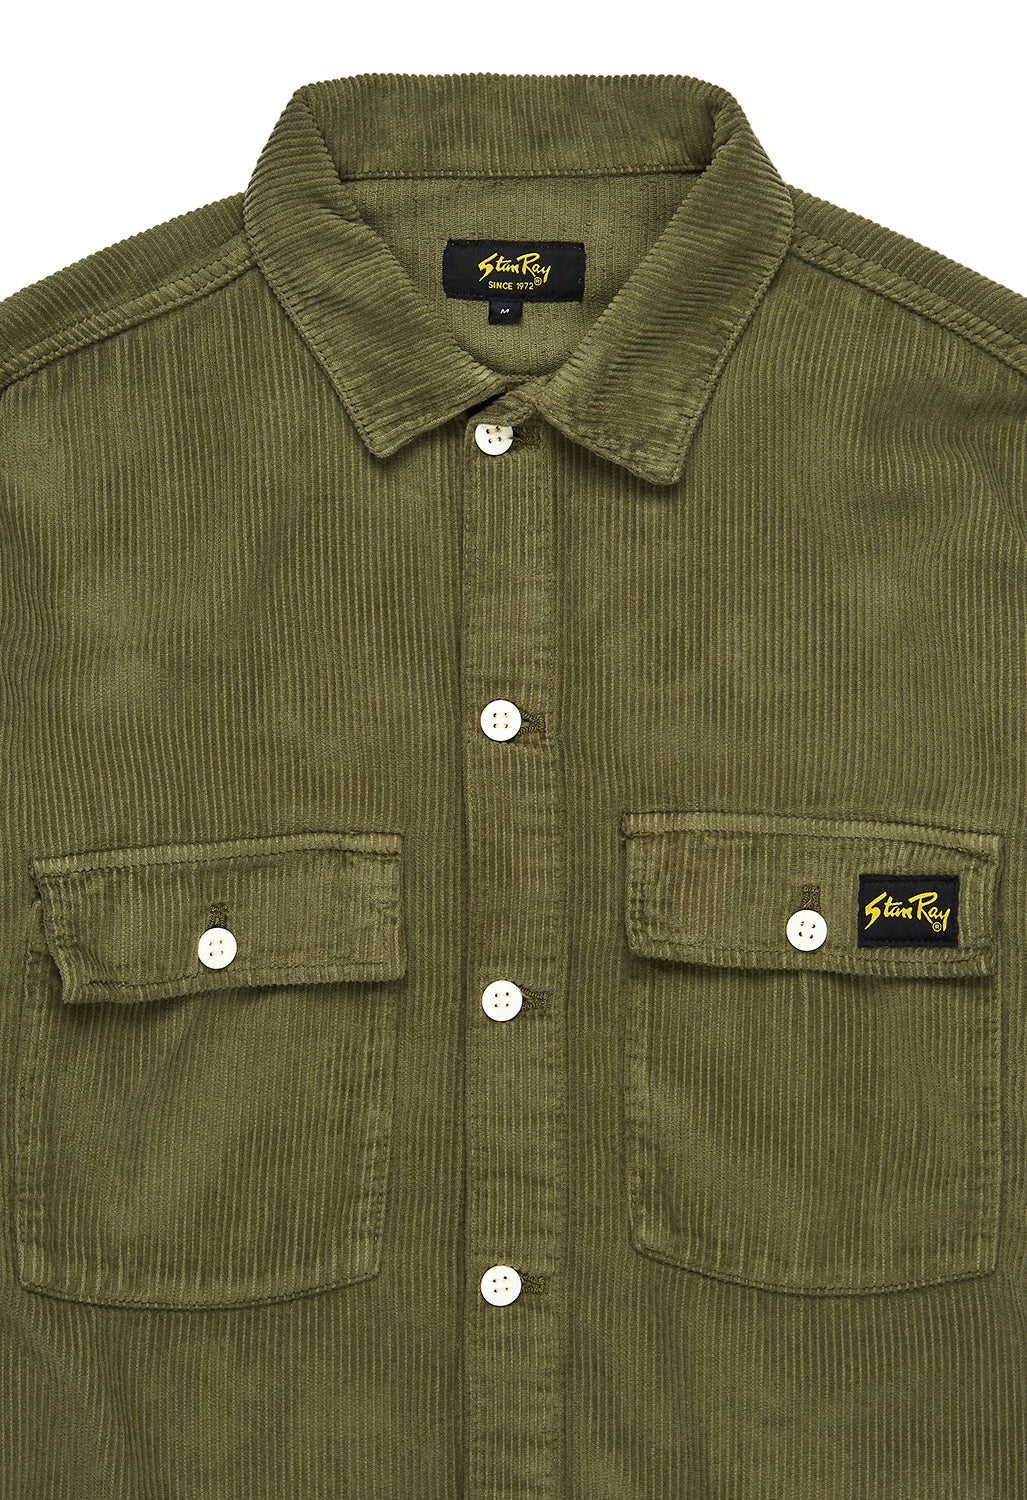 Stan Ray Men's CPO Shirt - Olive Cord